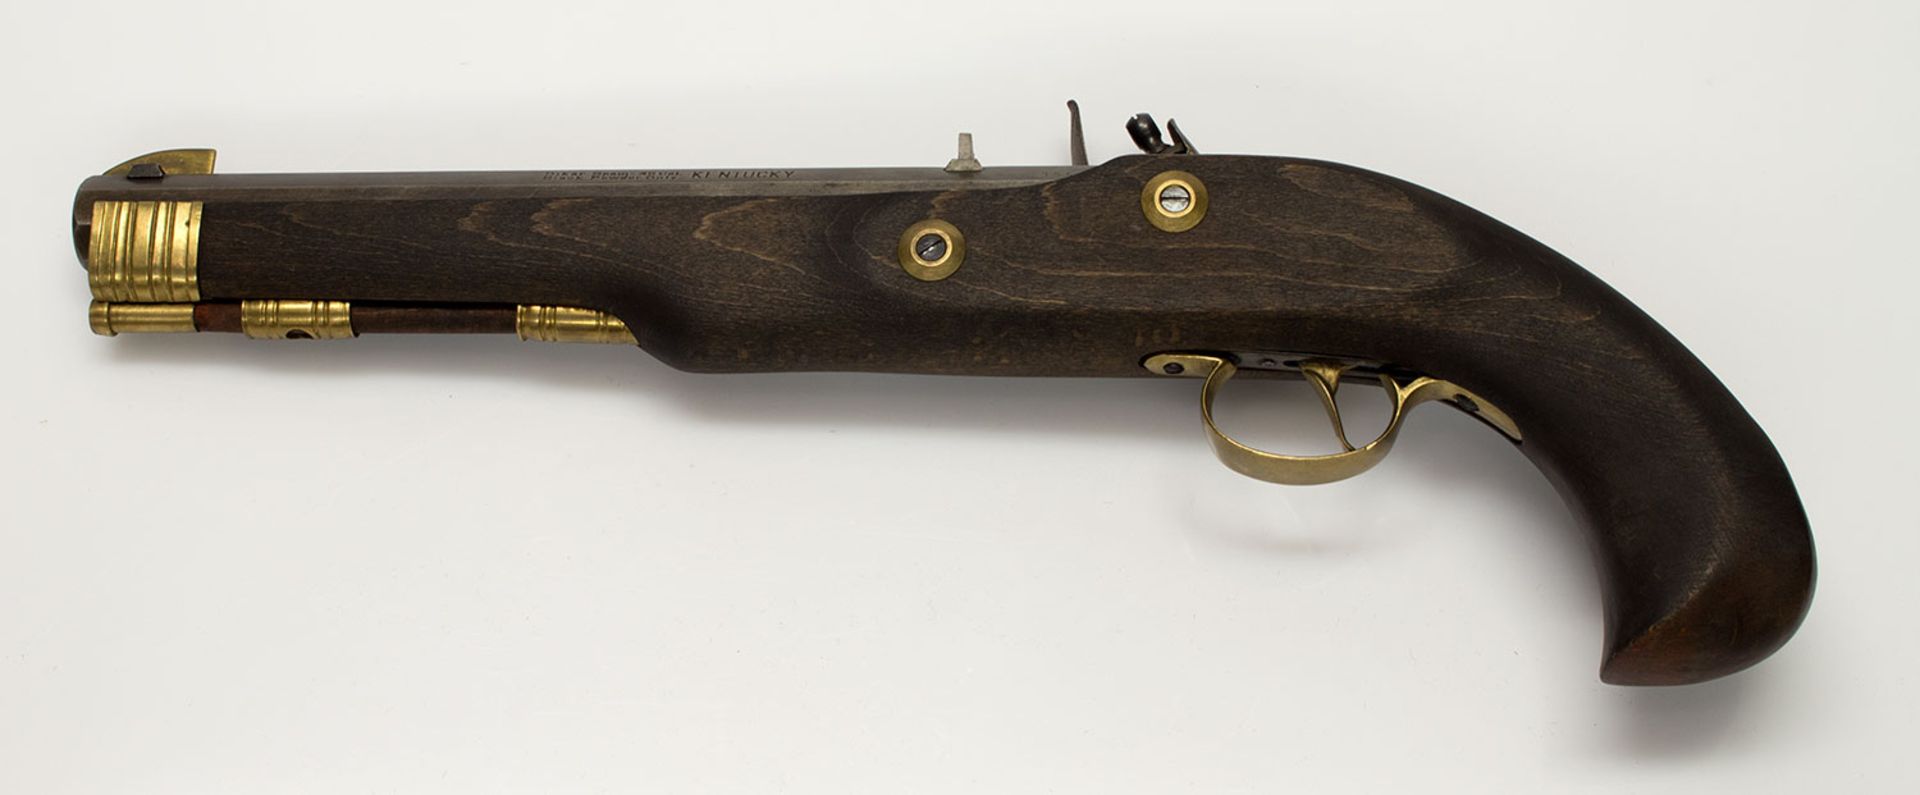 SteinschloßpistoleKentucky Black Powder, beschussfähig, Schäftung wohl später, L. 40 cm - Bild 2 aus 4